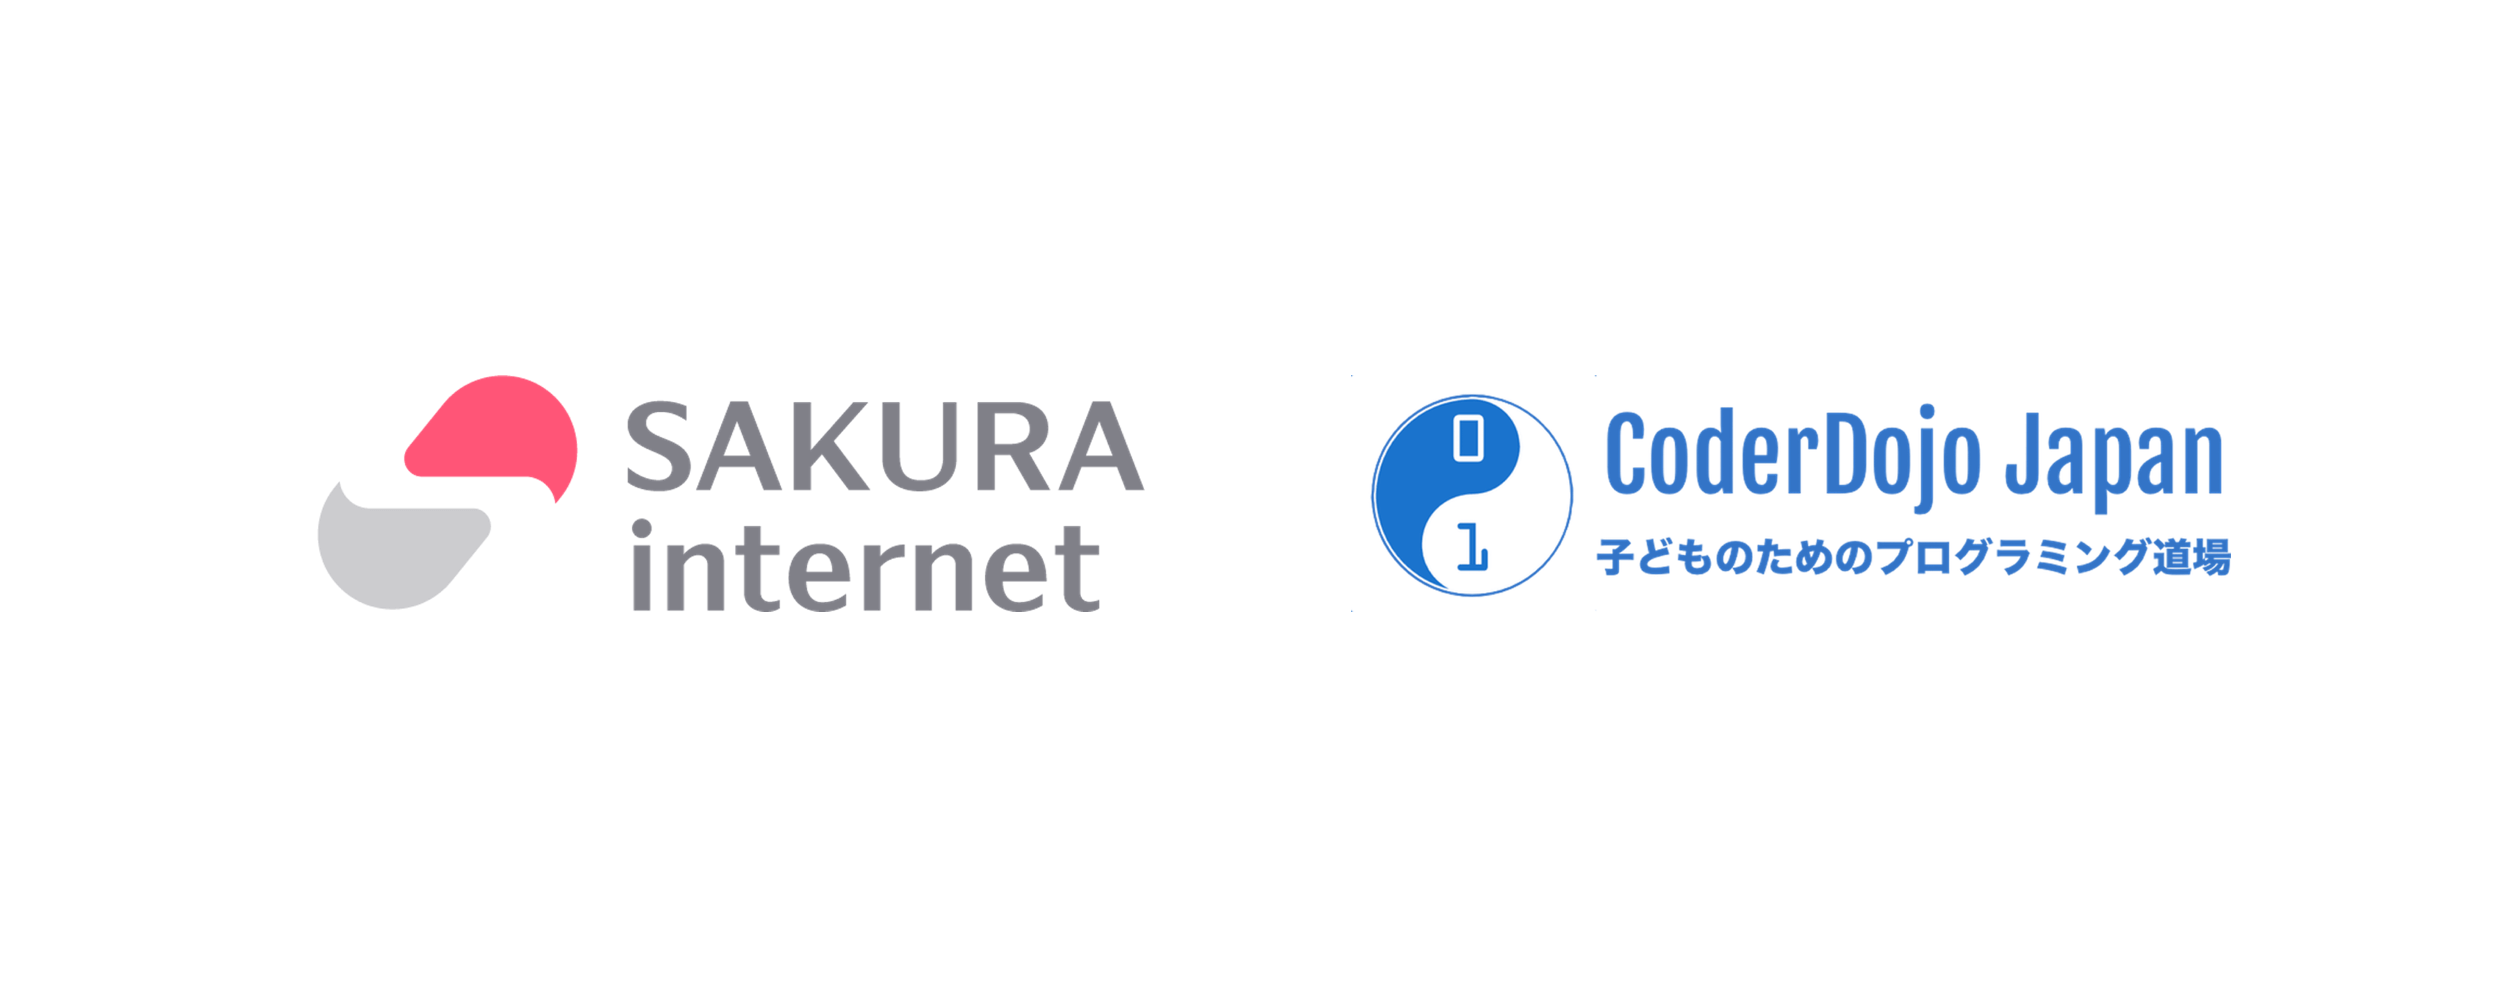 SAKURA internet と CoderDojo Japan